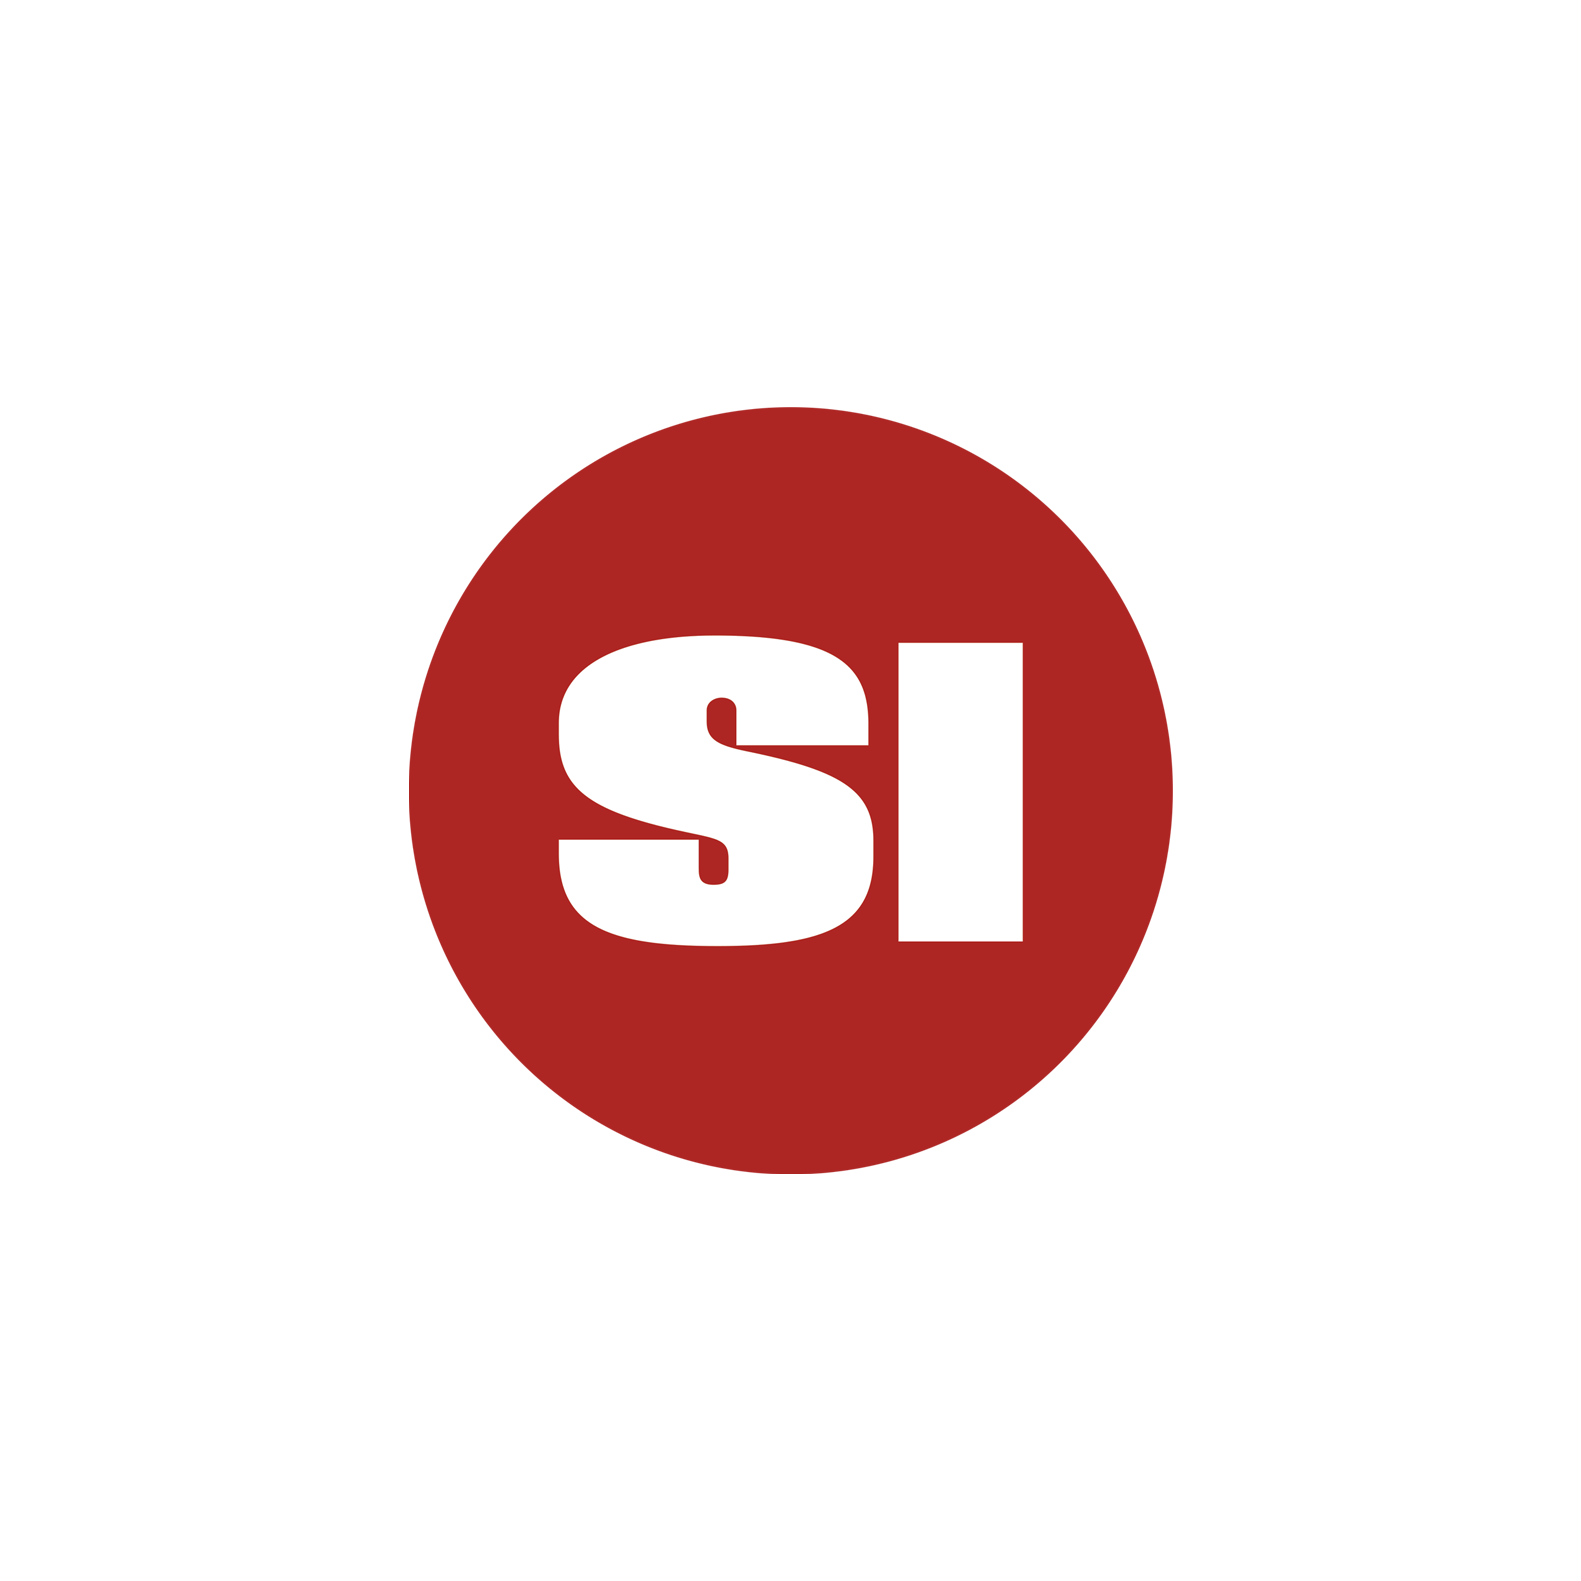 Sports Illustrated Logo